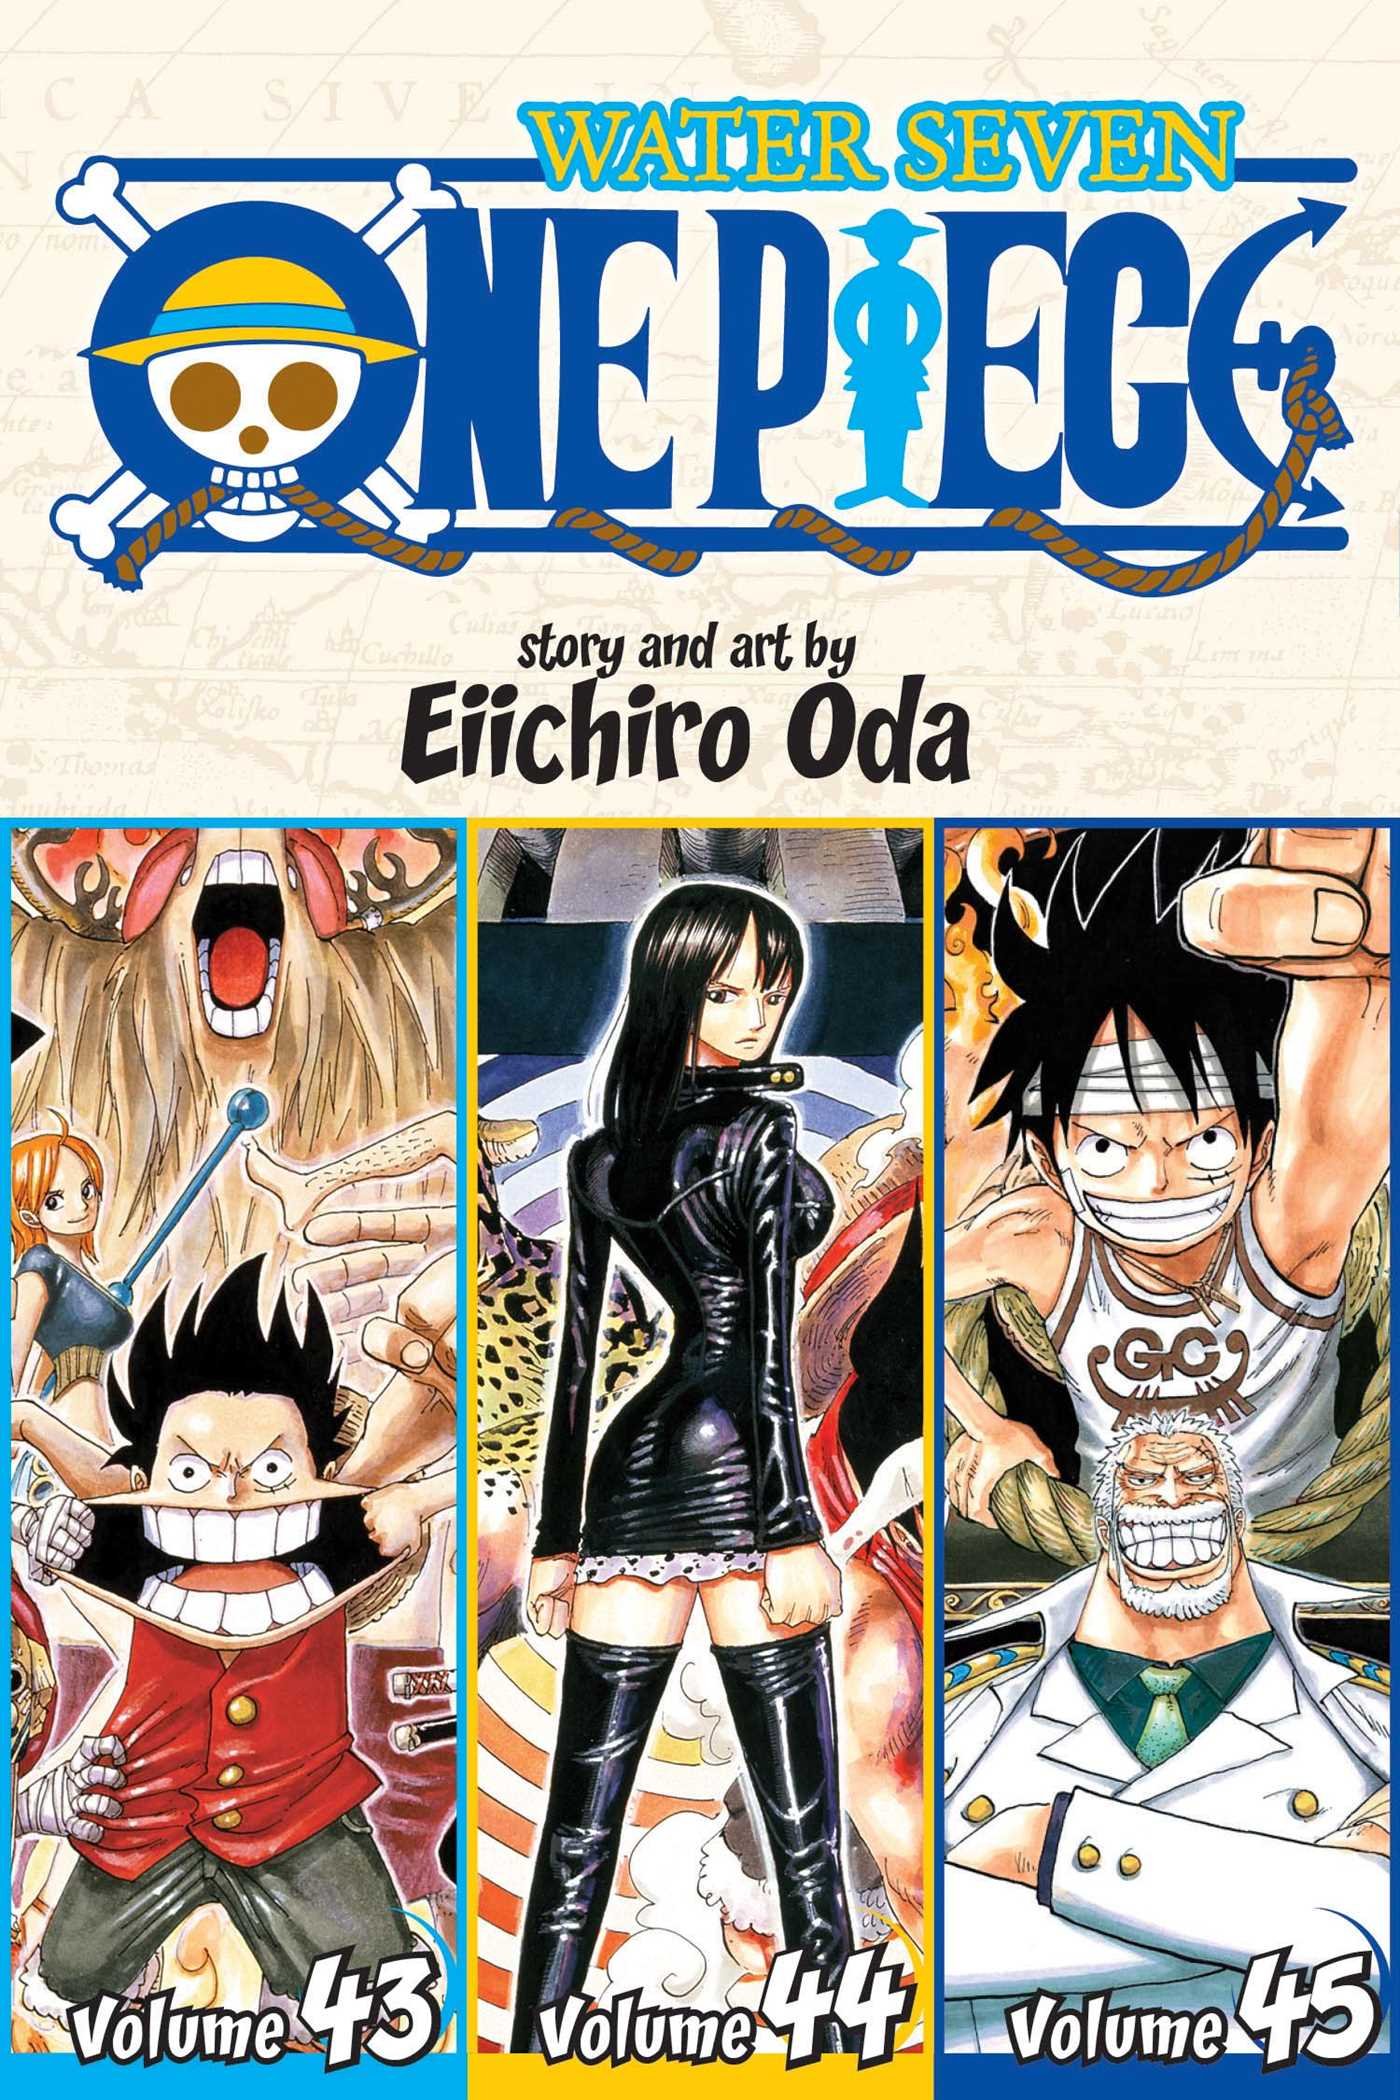 Publisher Viz Media - One Piece:Water Seven (Vol.43-44-45)Omnibus Edition Vol. 15 - Eiichiro Oda